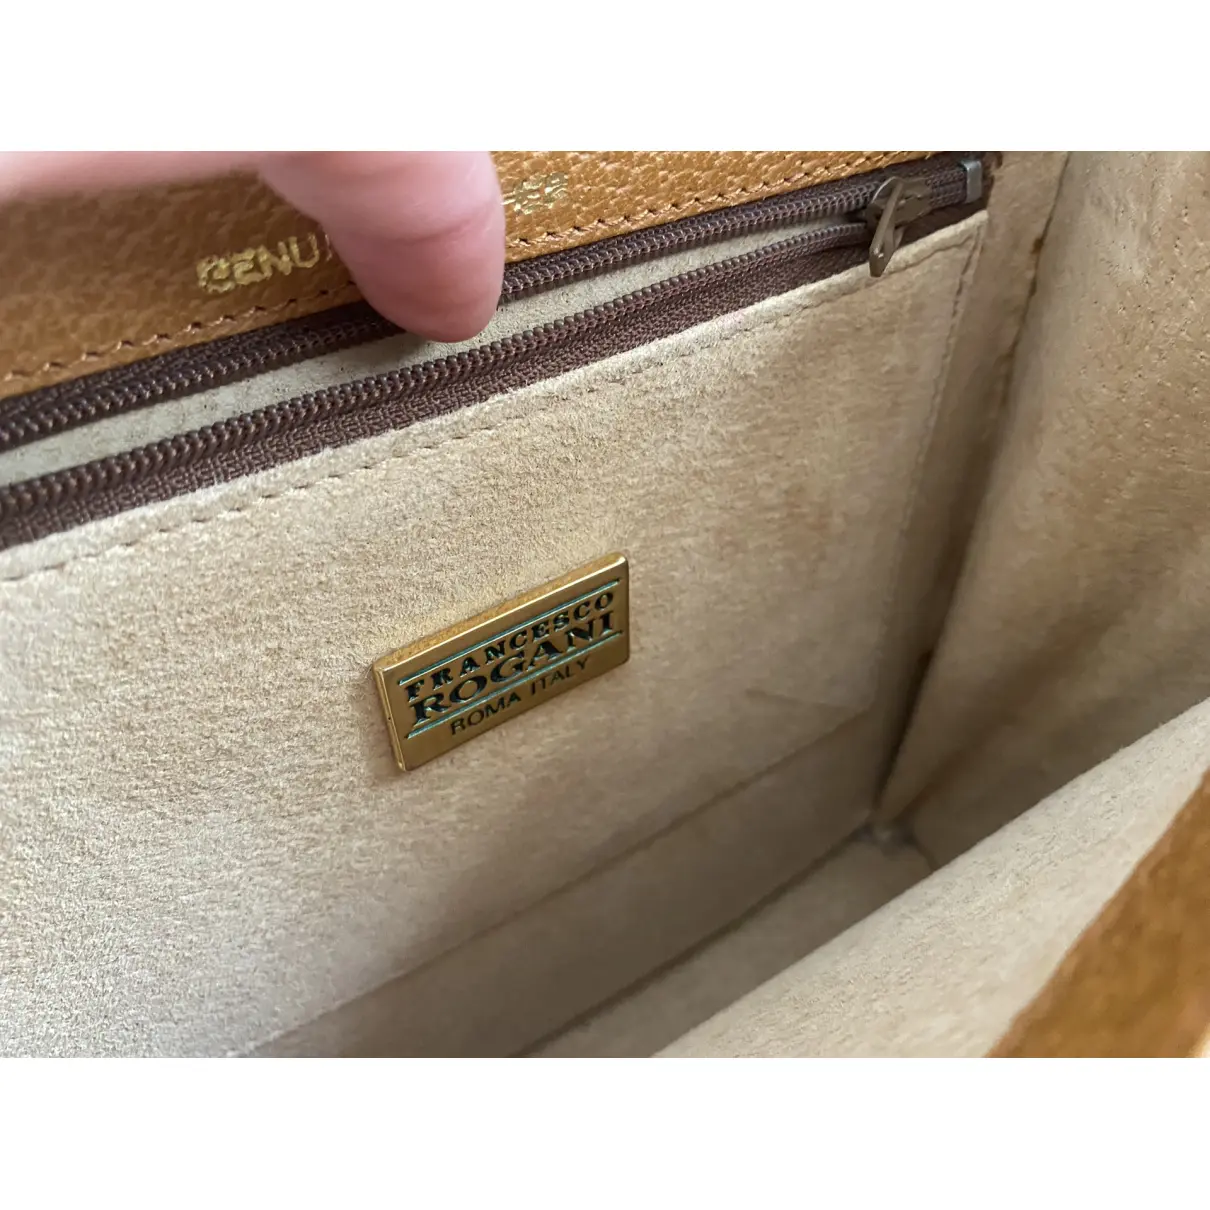 Leather handbag Francesco Rogani